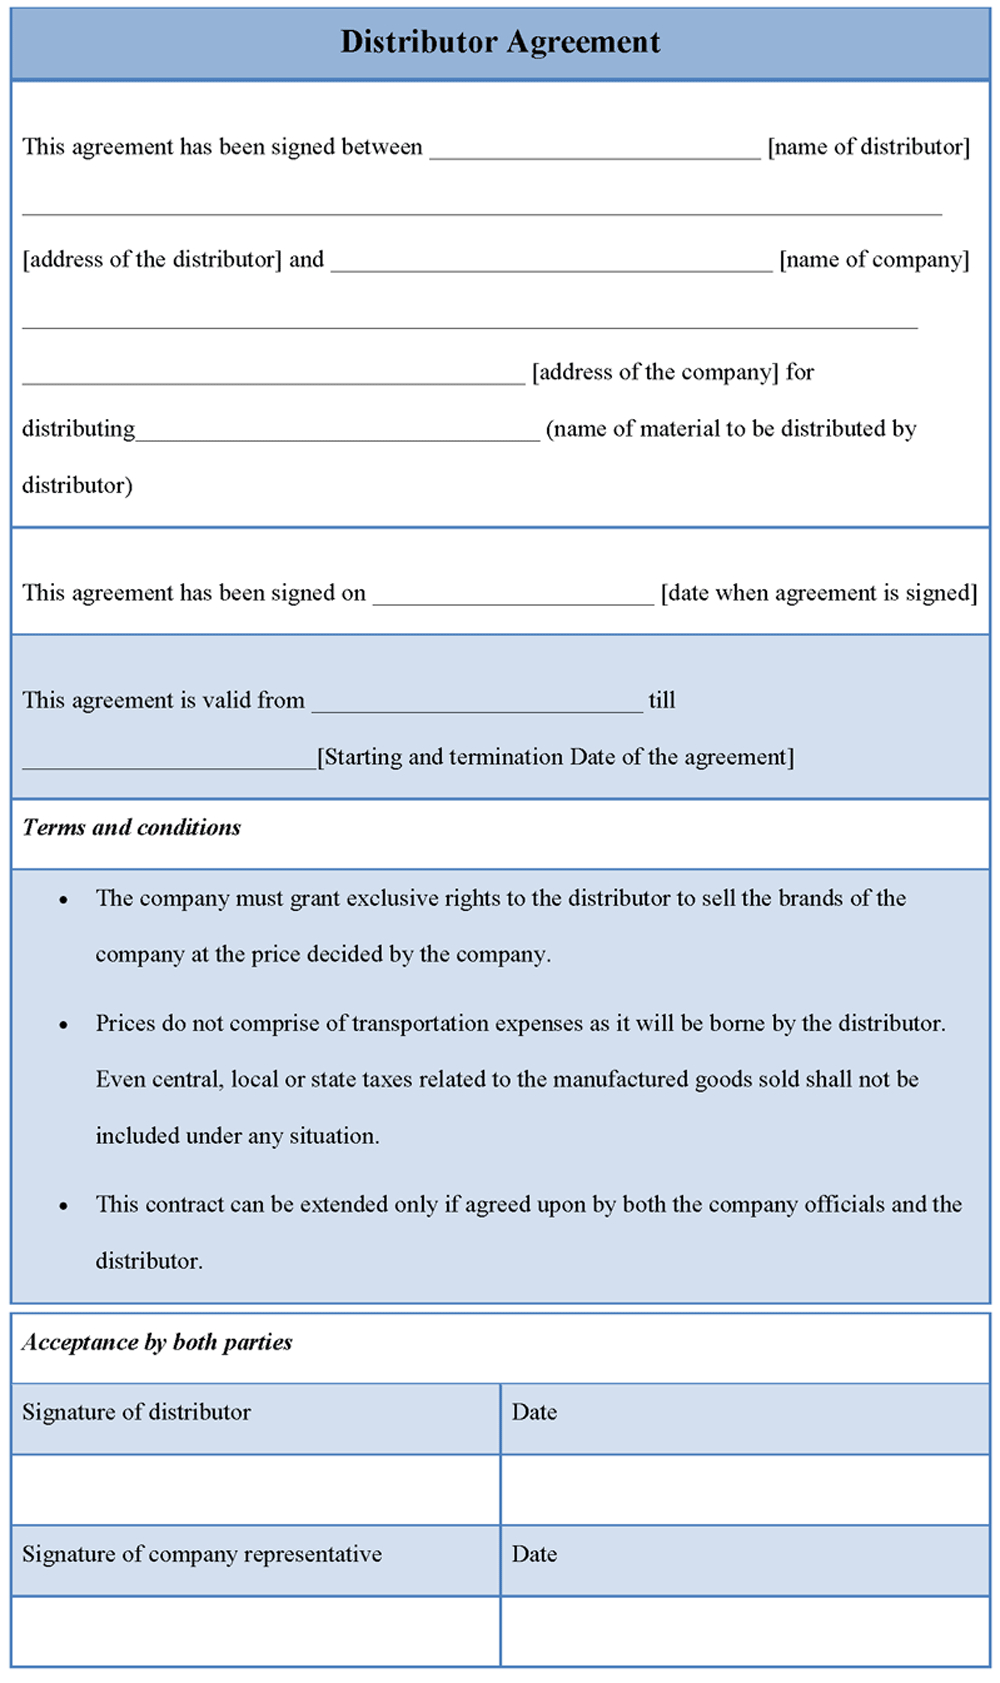 Distributor Agreement Sample Contract Samples Distributor Agreement Template Form